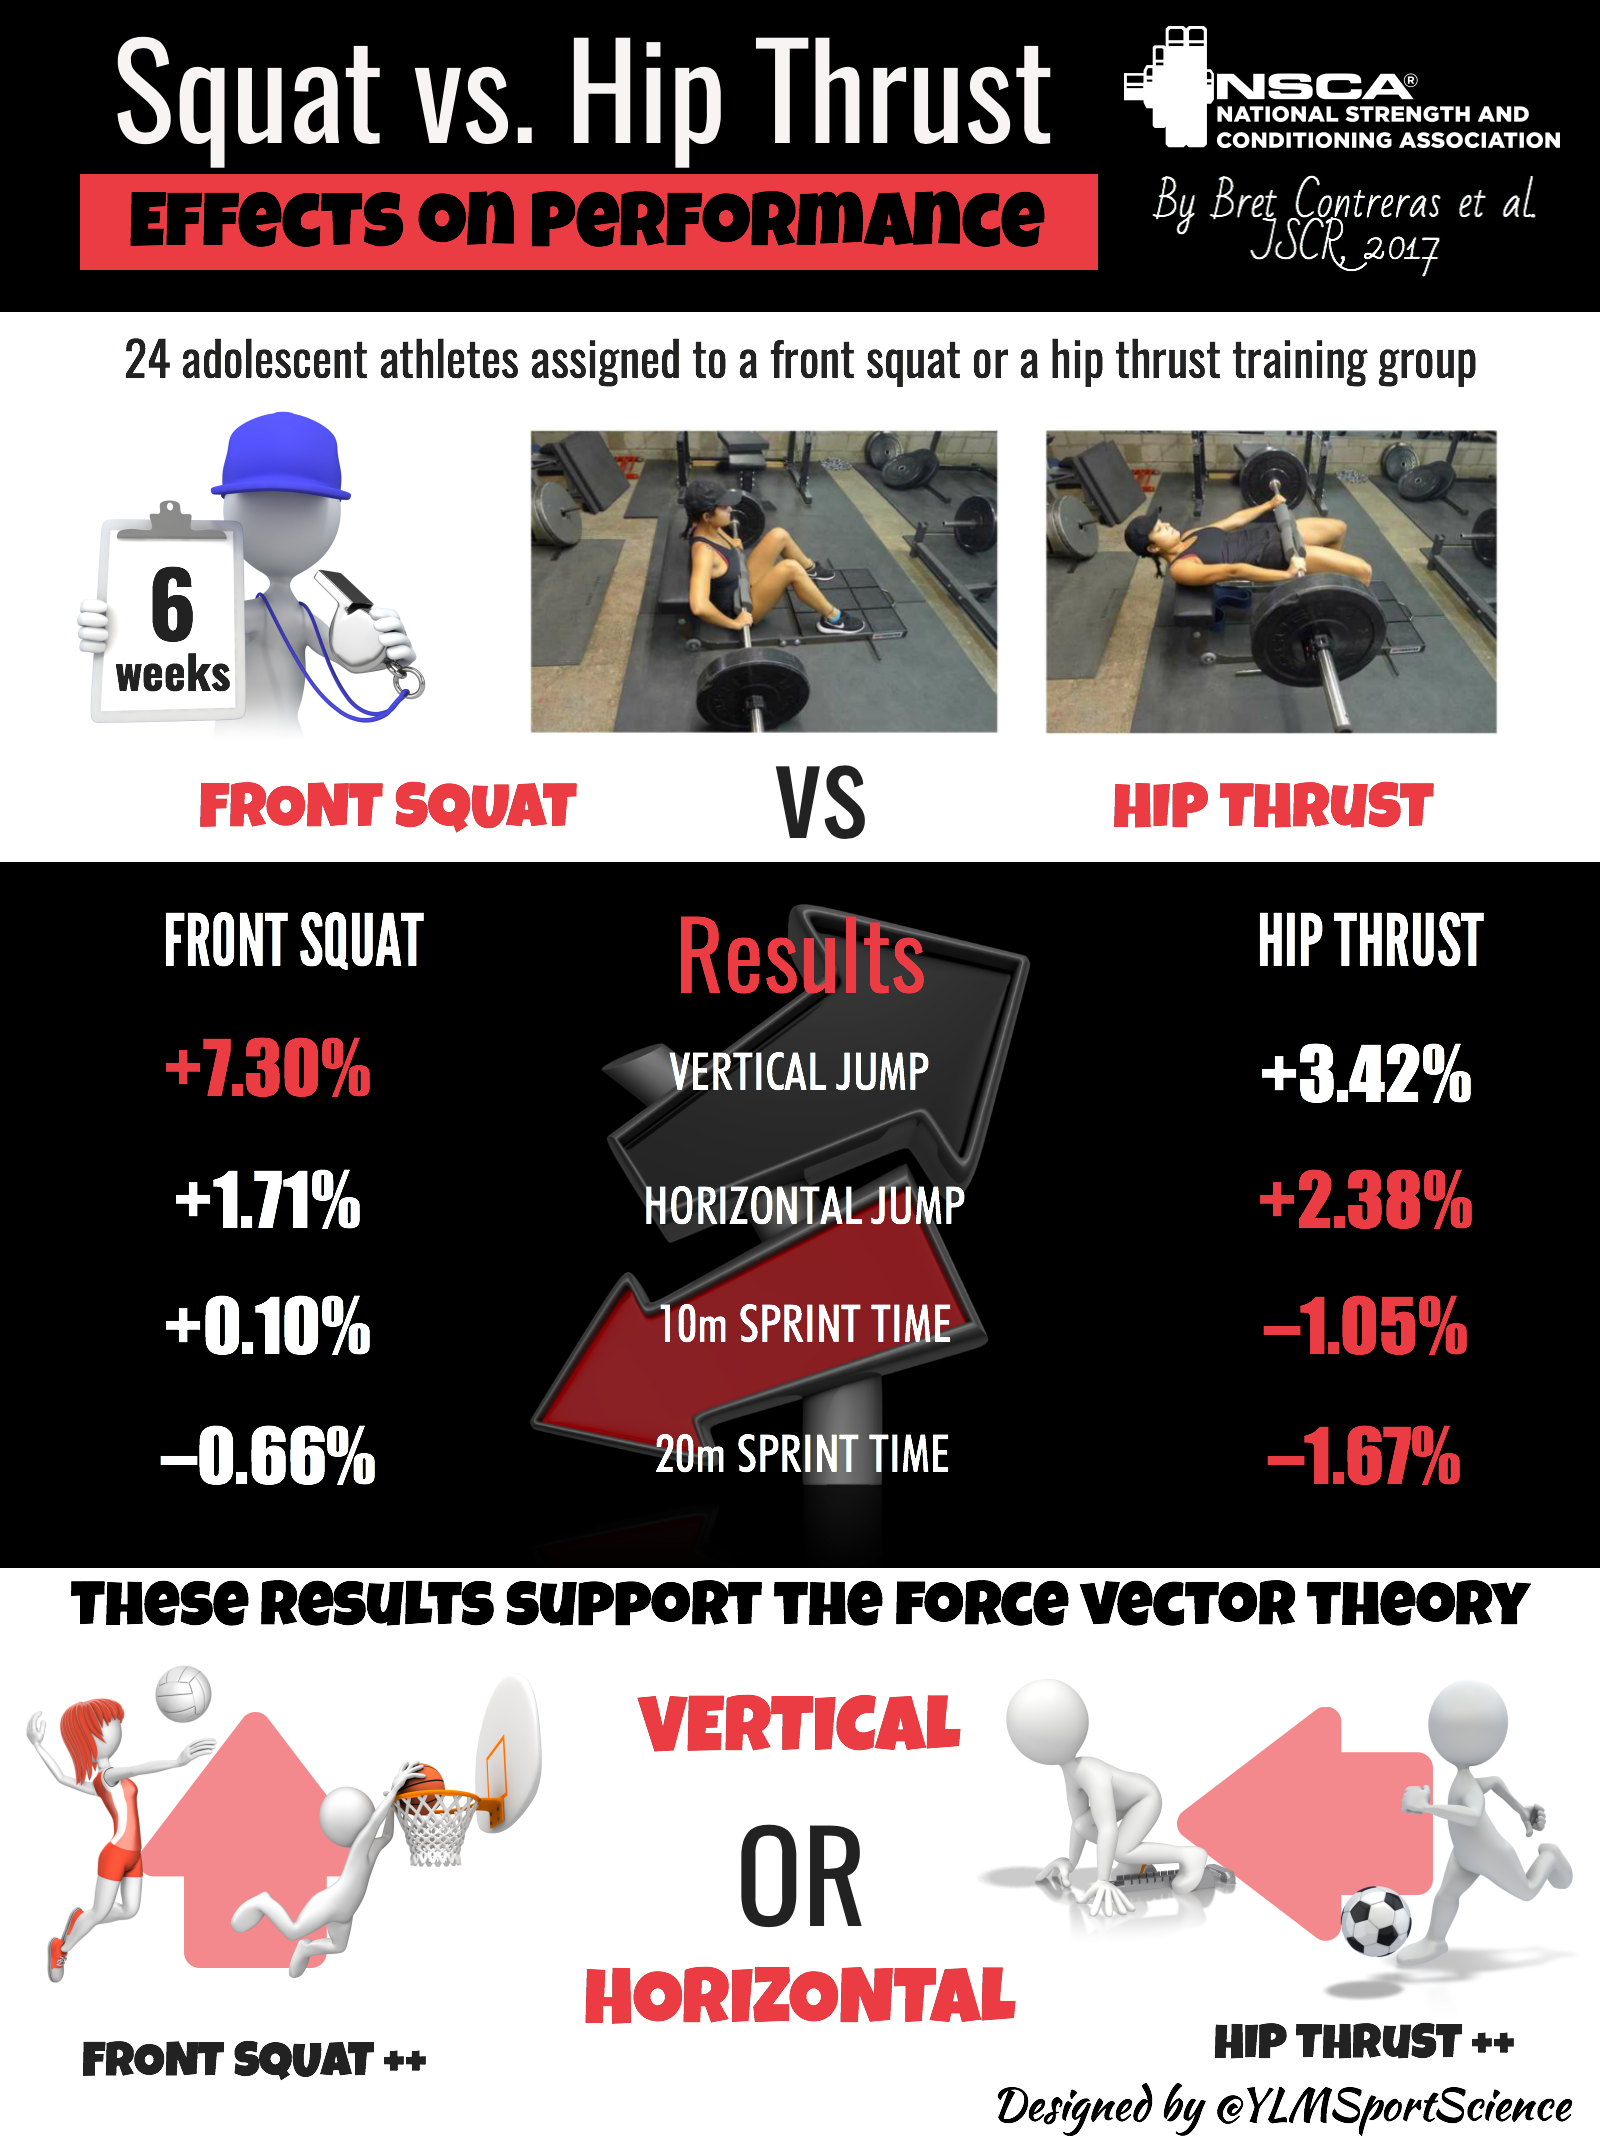 Front squat vs hip thurst effect on performance